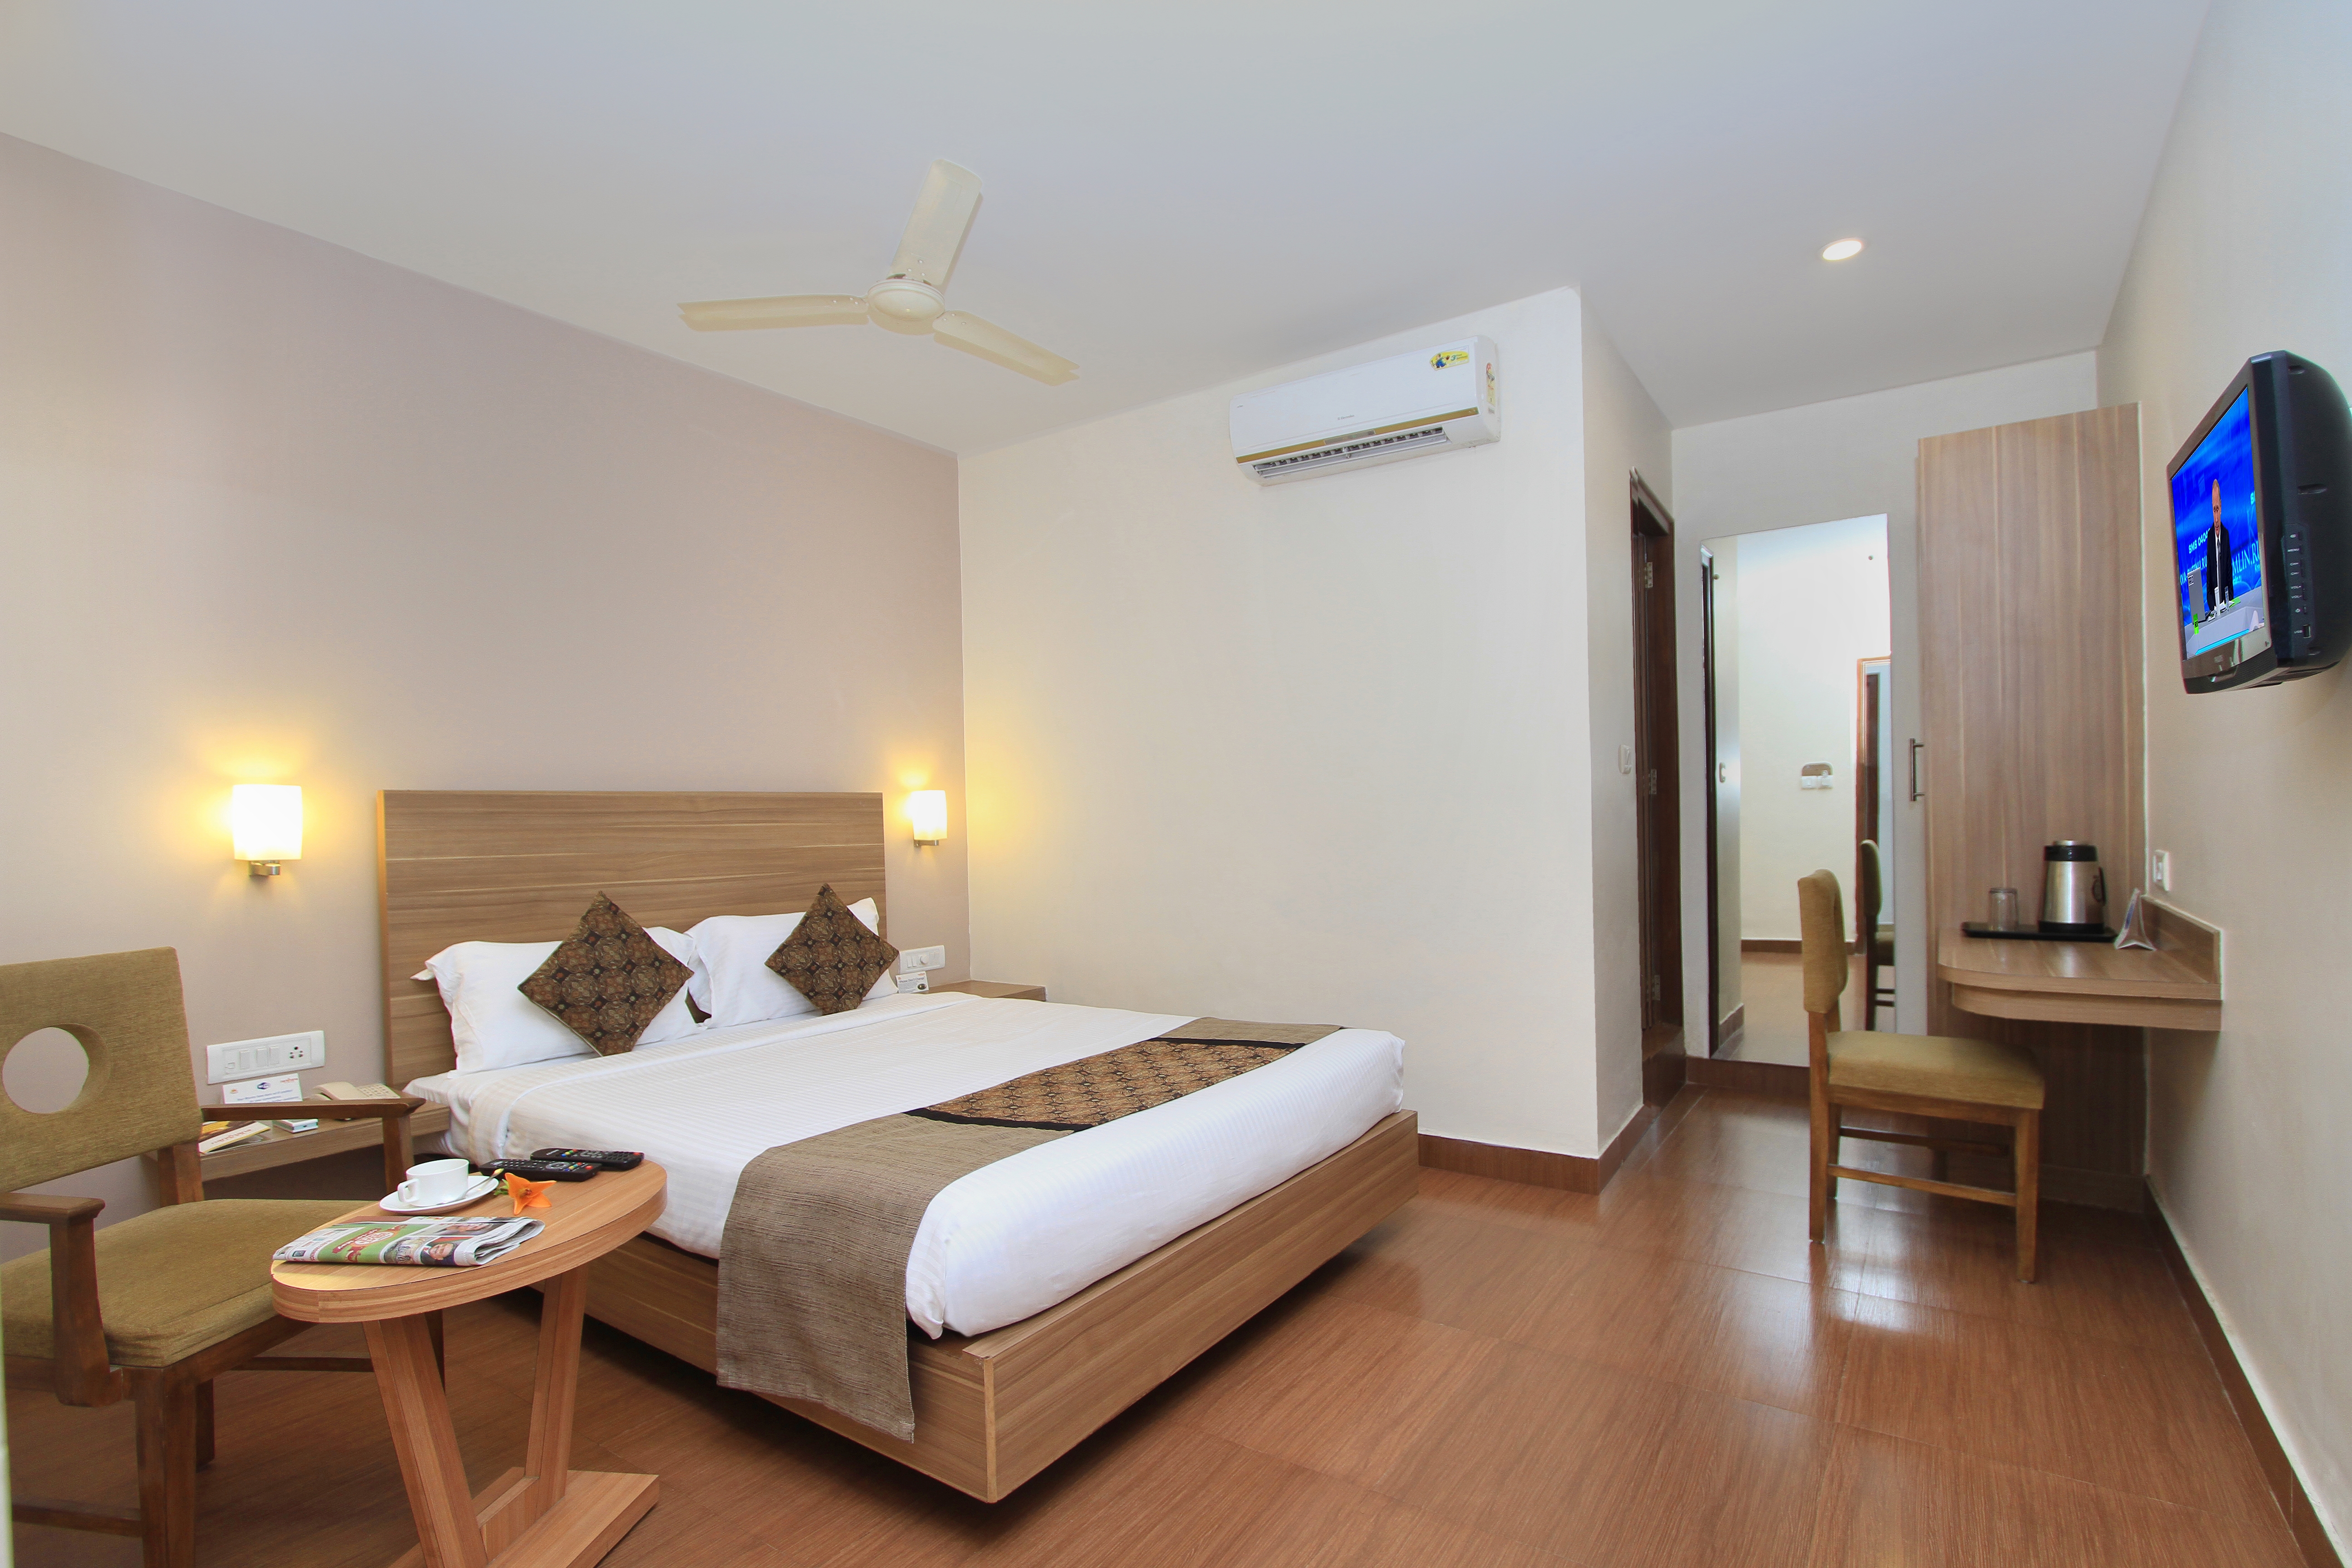 STANDARD ROOM, LA SARA VISTA, KAMMANAHALLI, budget hotel in Bangalore 1